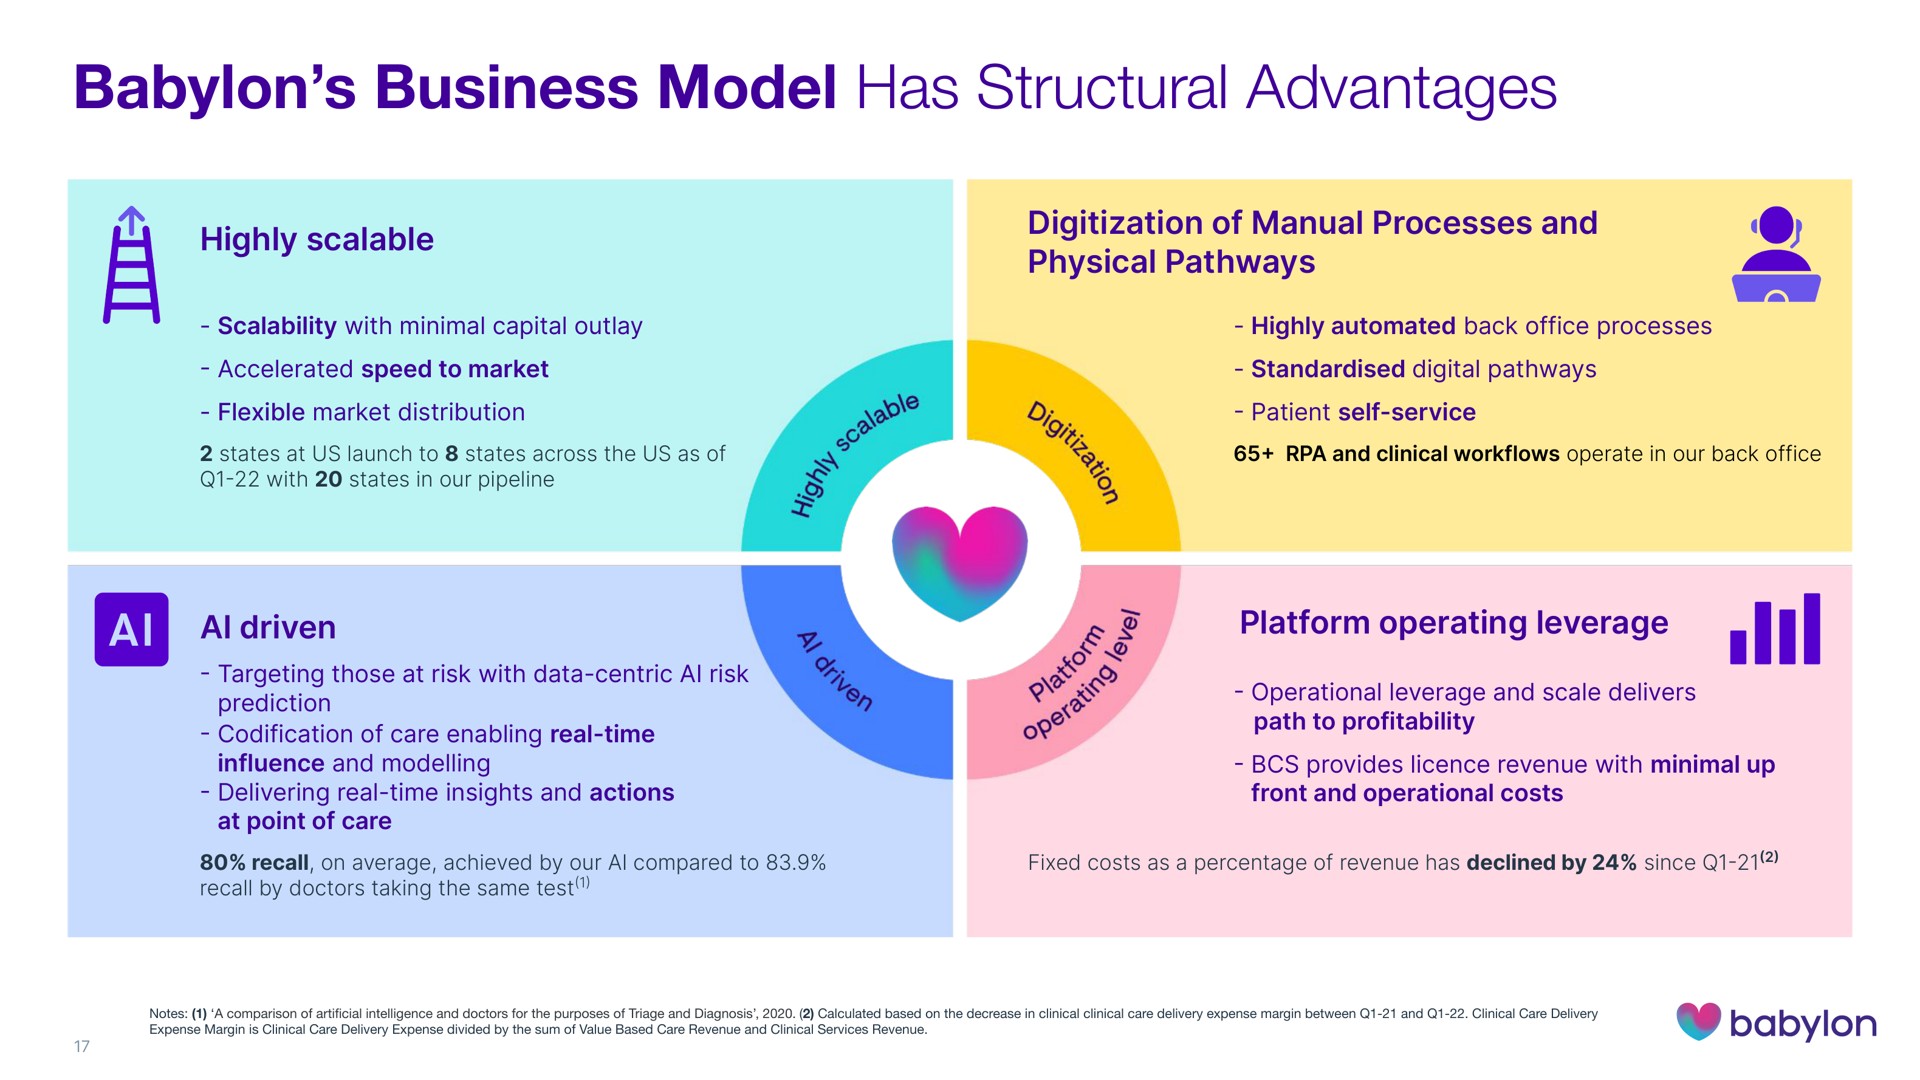 business model has structural advantages | Babylon